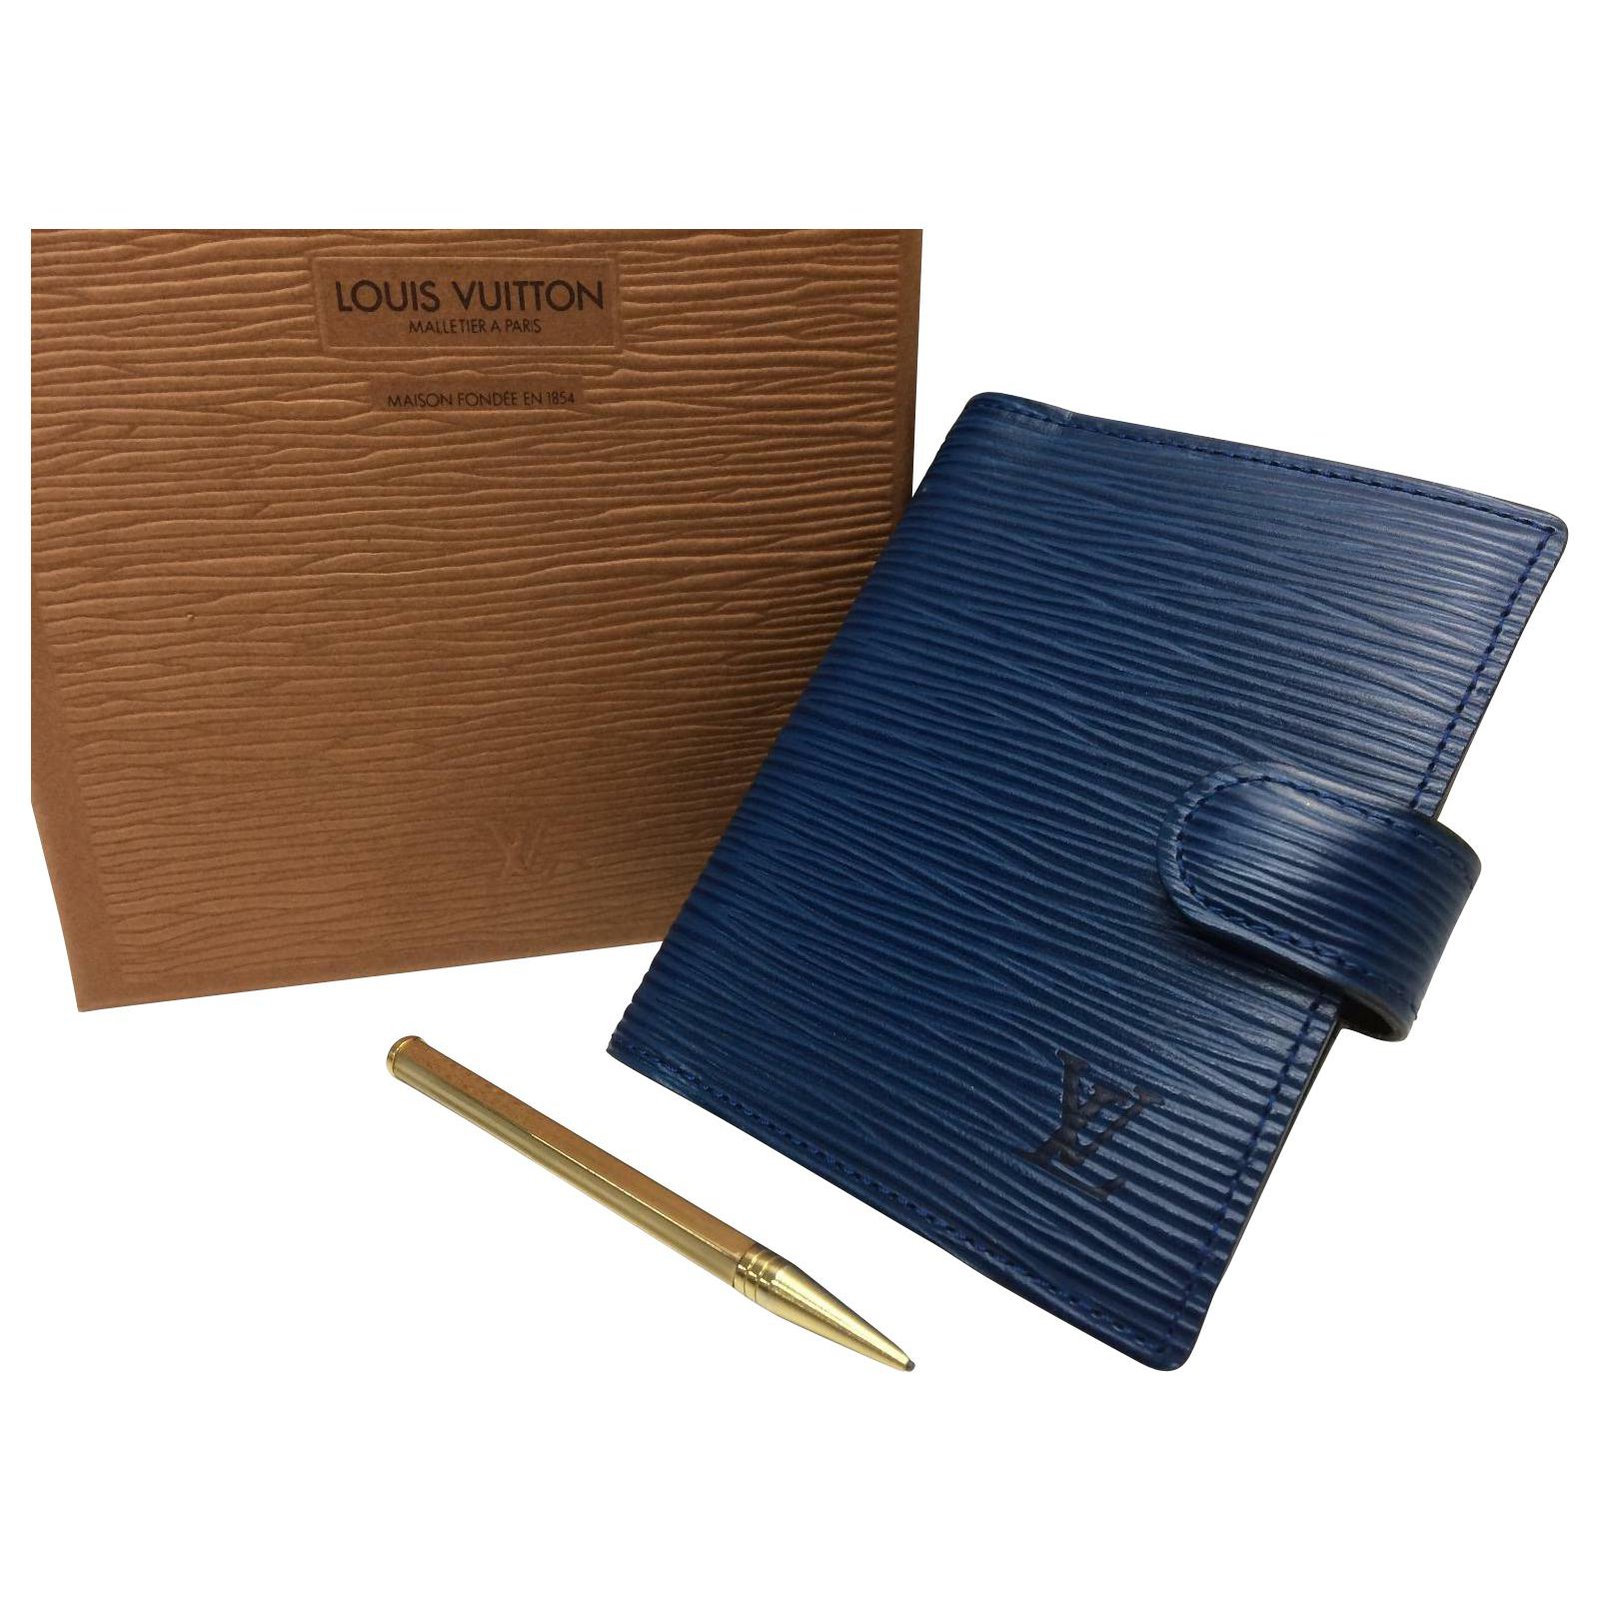 Louis Vuitton Mini Agenda Notizbuch & Druckbleistift Blau Leder